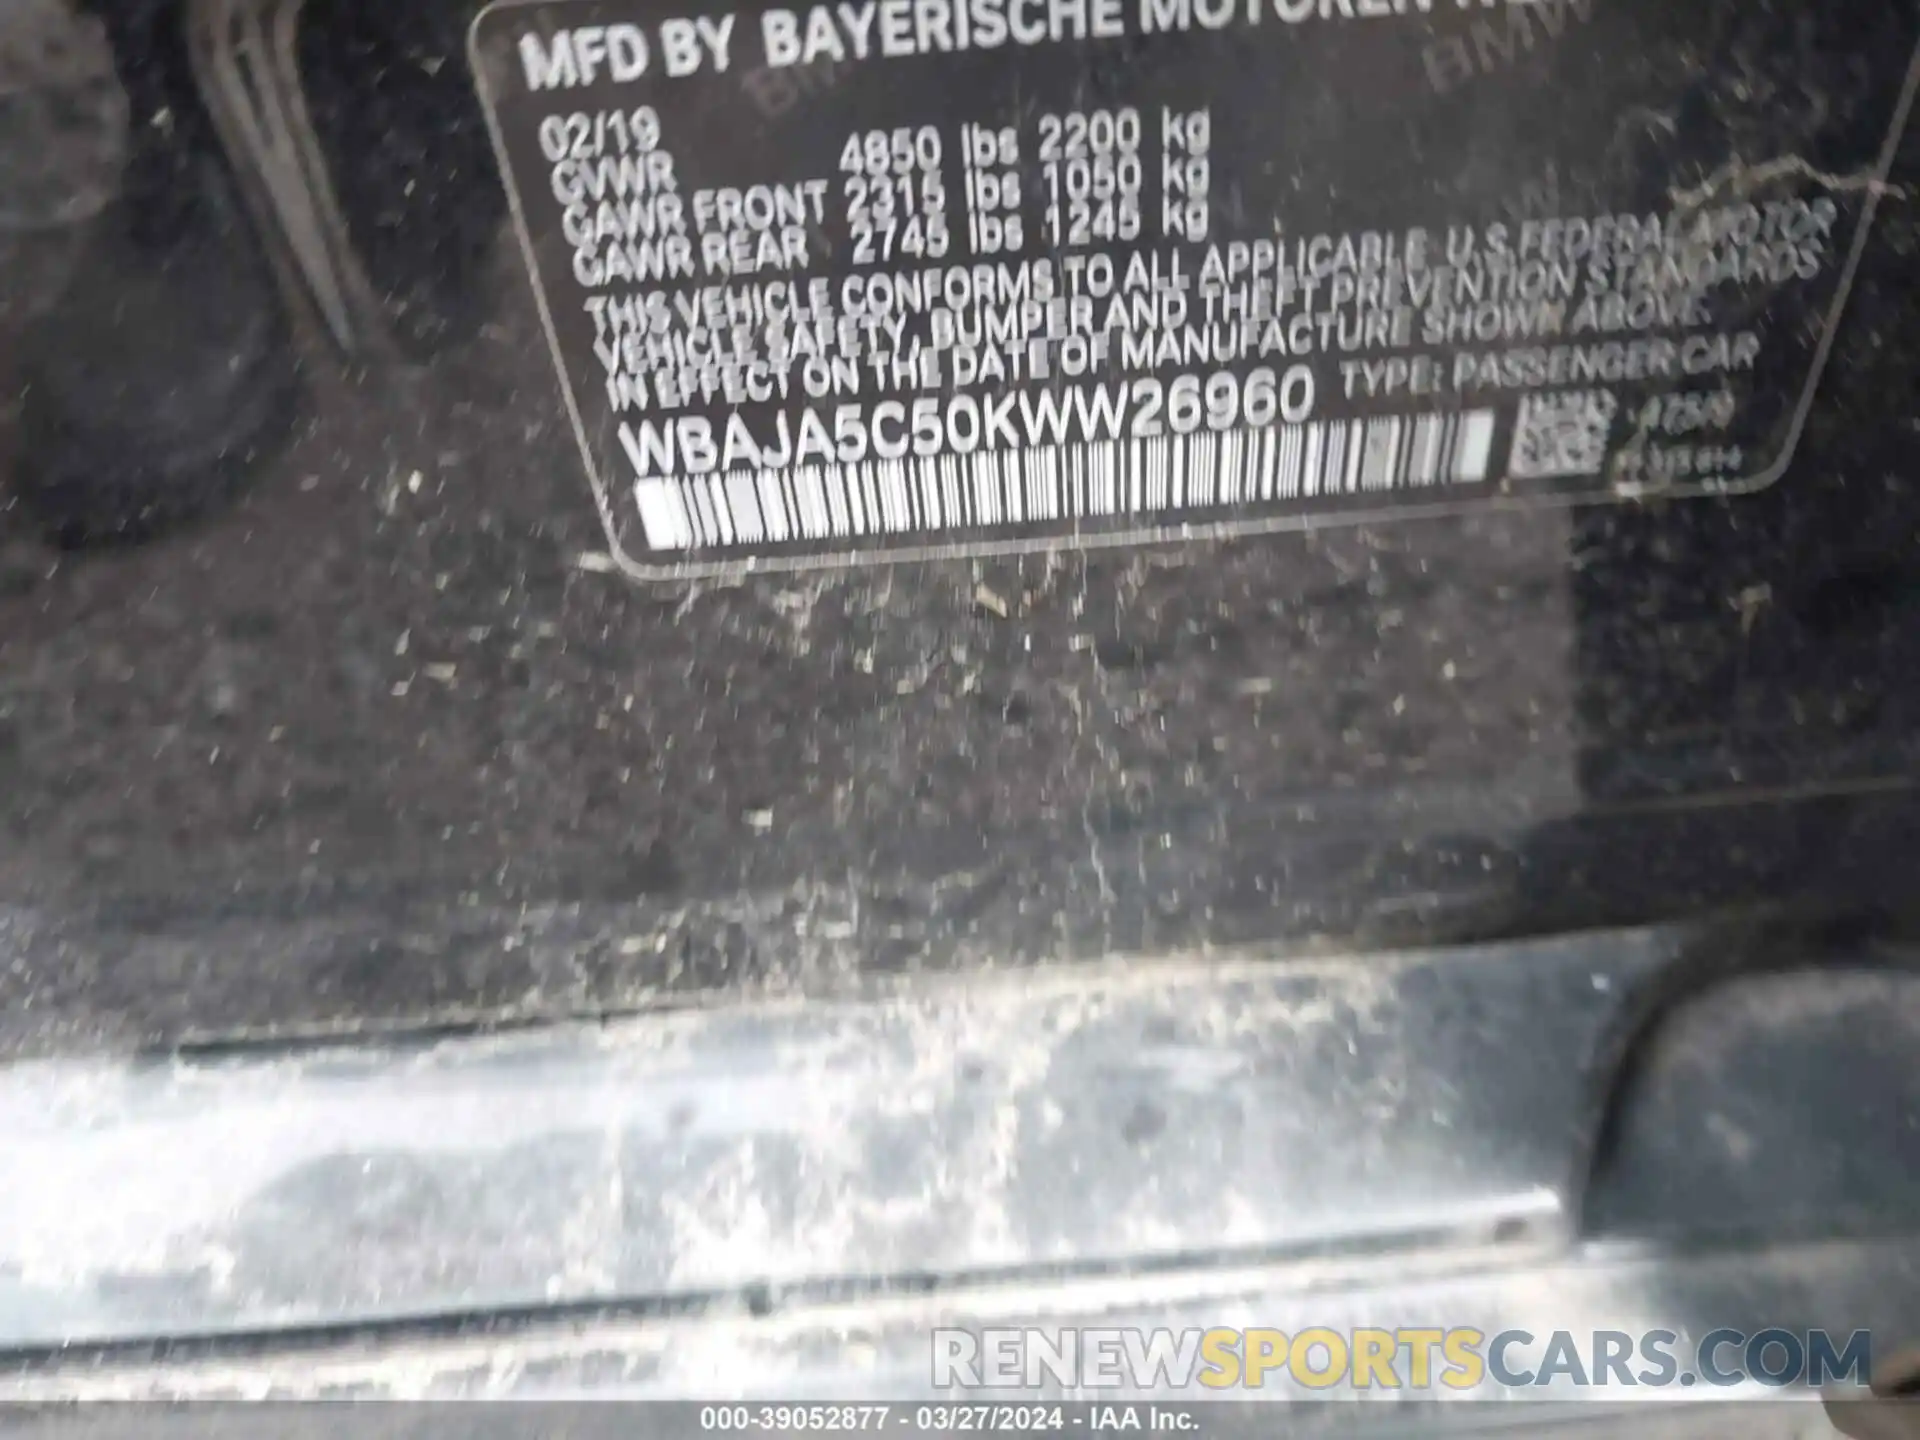 9 Photograph of a damaged car WBAJA5C50KWW26960 BMW 530I 2019